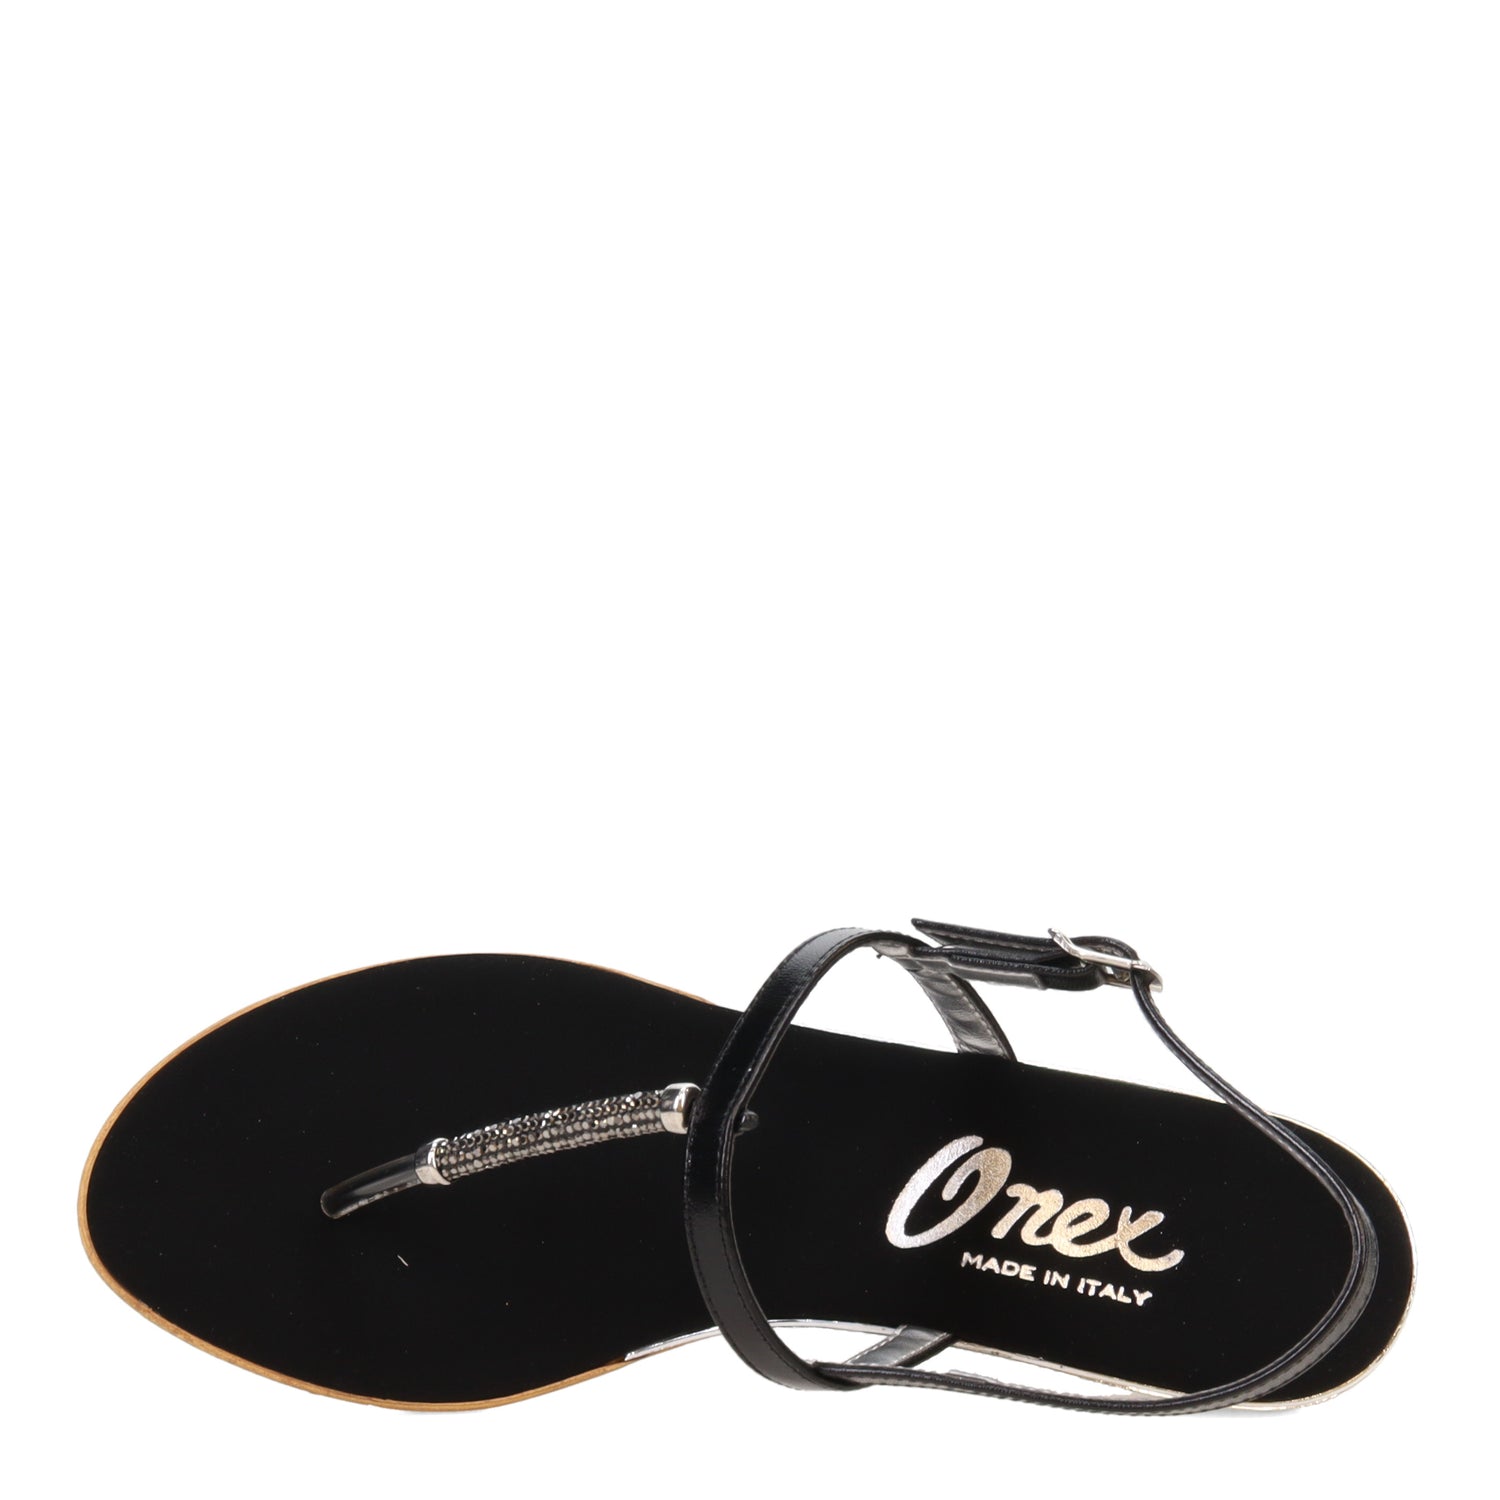 Peltz Shoes  Women's Onex Ava Sandal BLACK AVA-BLK